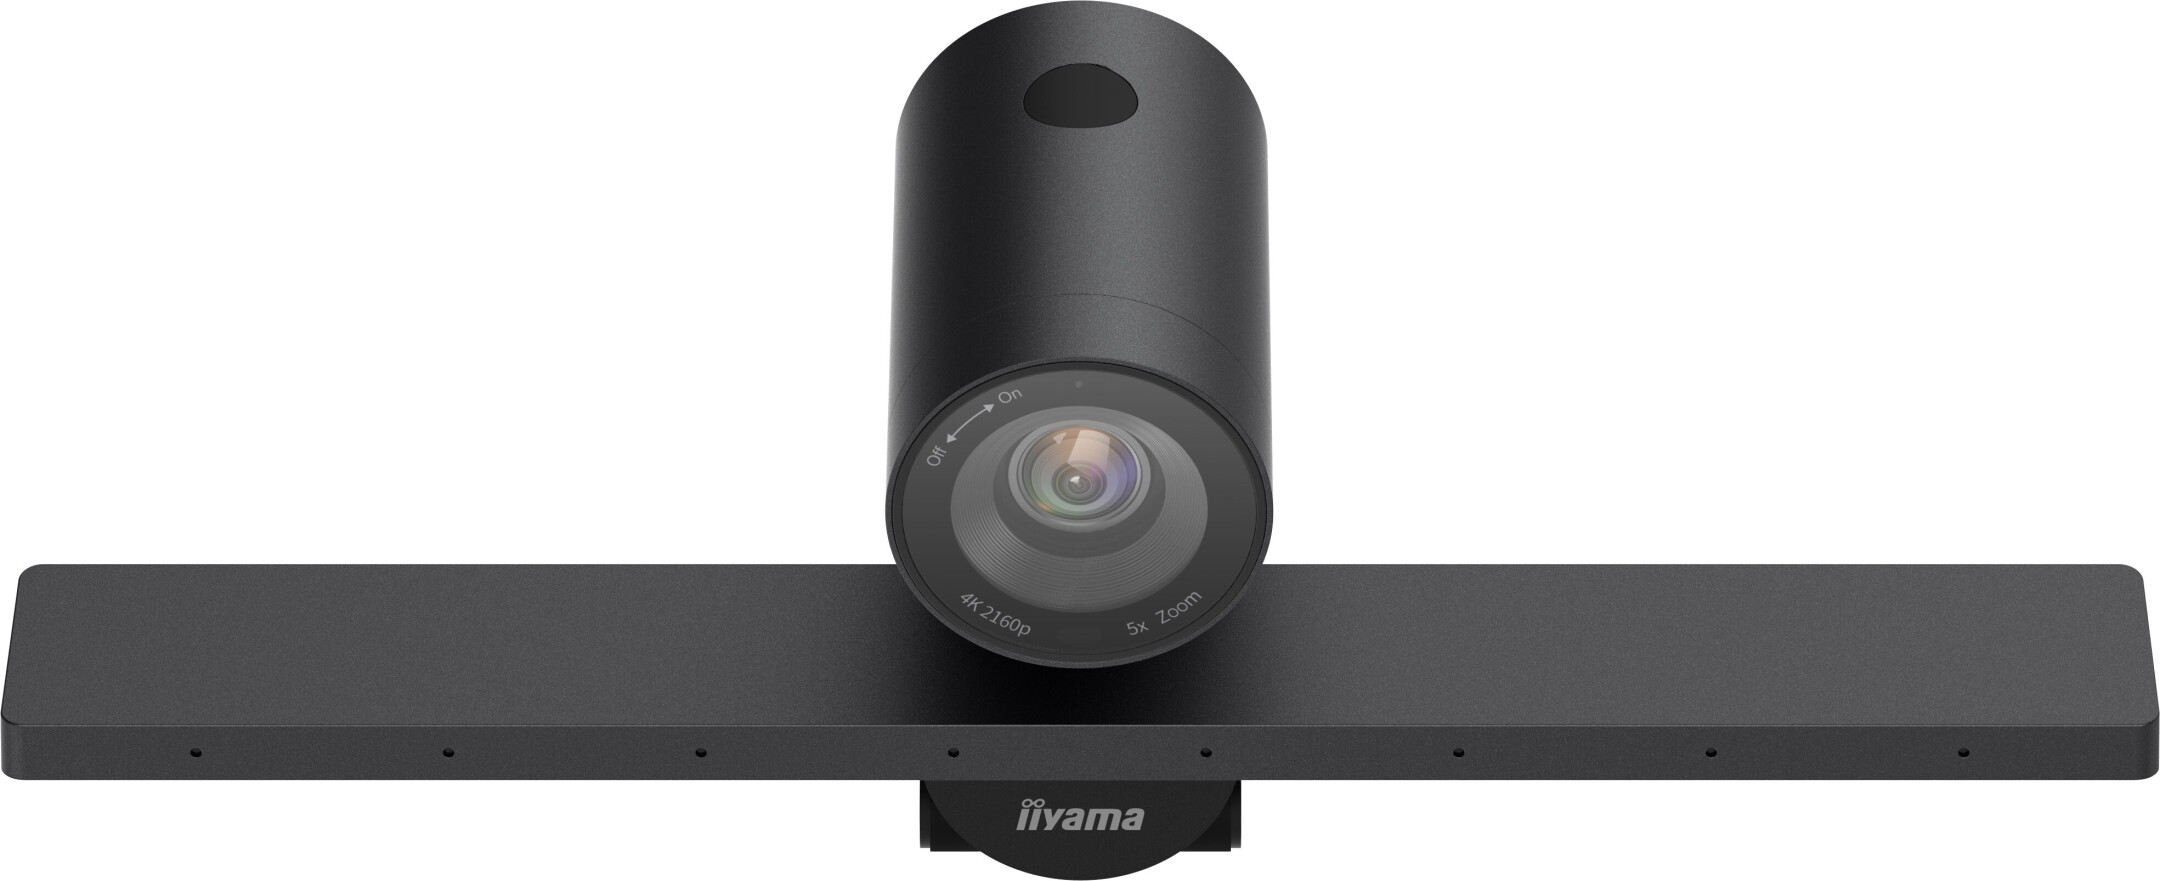 iiyama-UC-CAM10PRO-MA1-4K-Webcam-8-MP-FoV-120-30fps-UHD